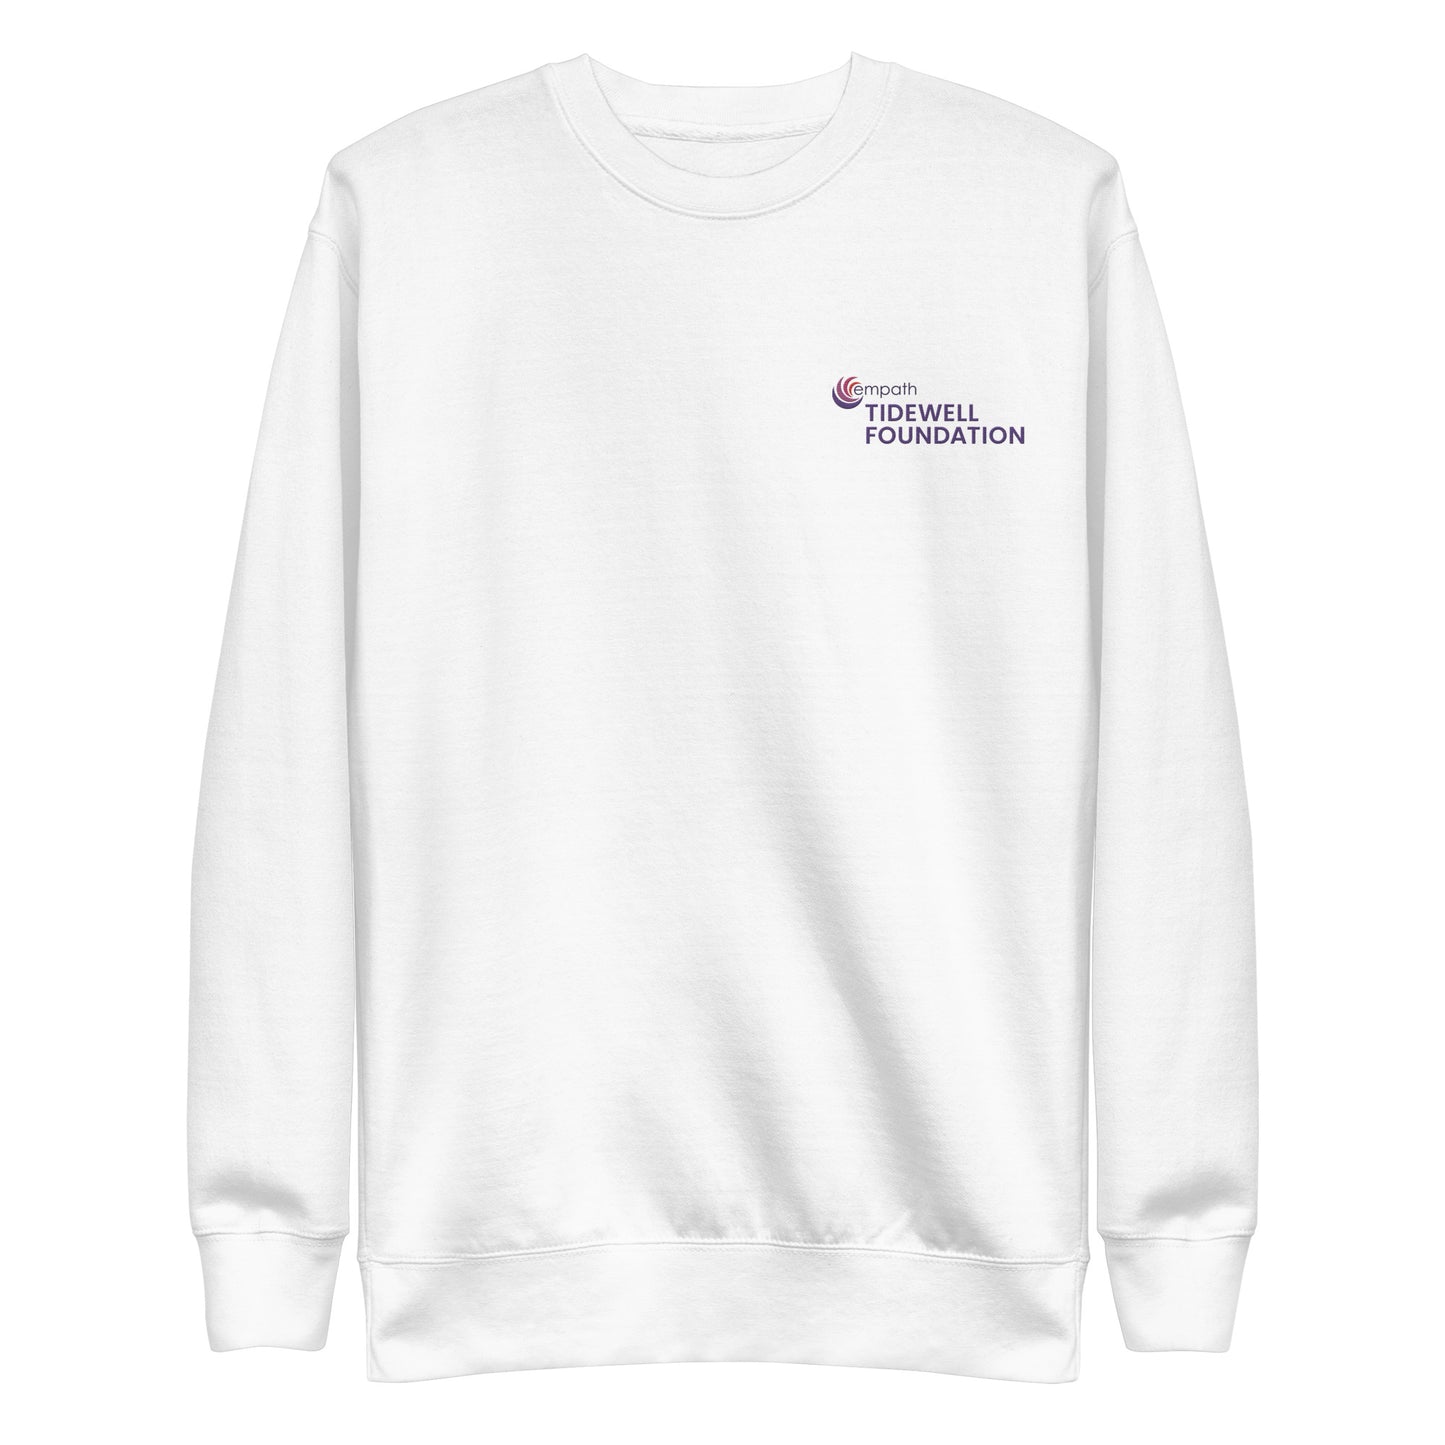 Unisex Premium Sweatshirt (fitted cut) - Tidewell Foundation